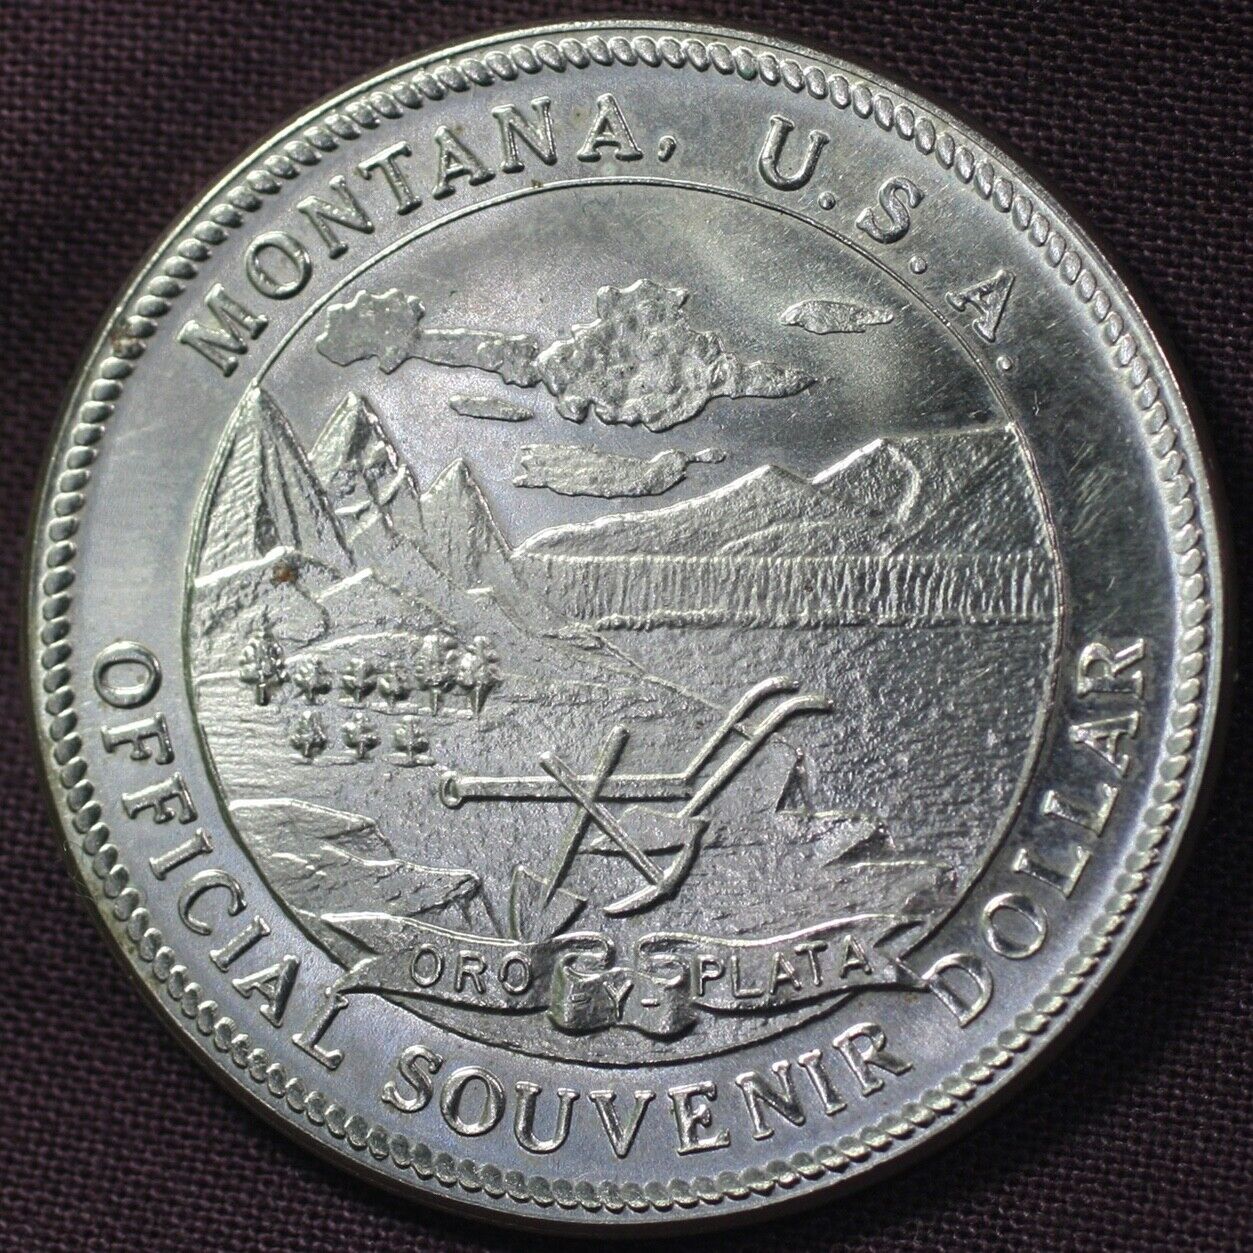 1984 Montana Statehood 75th Anniversary Jubilee Territorial Centennial Medallion